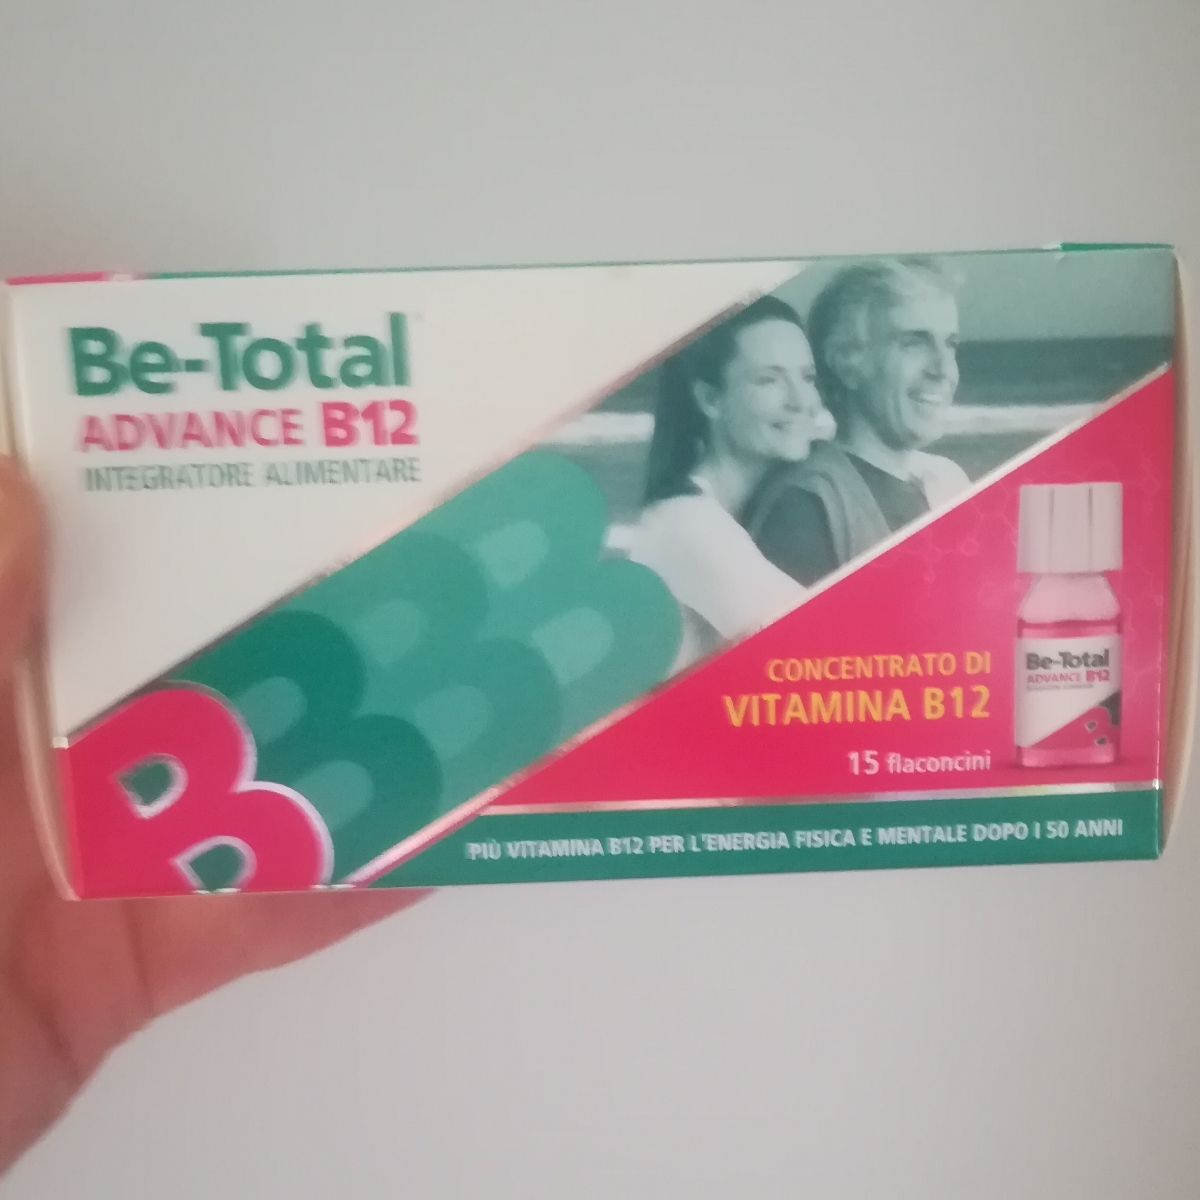 BeTotal Betotal advance B12 Review